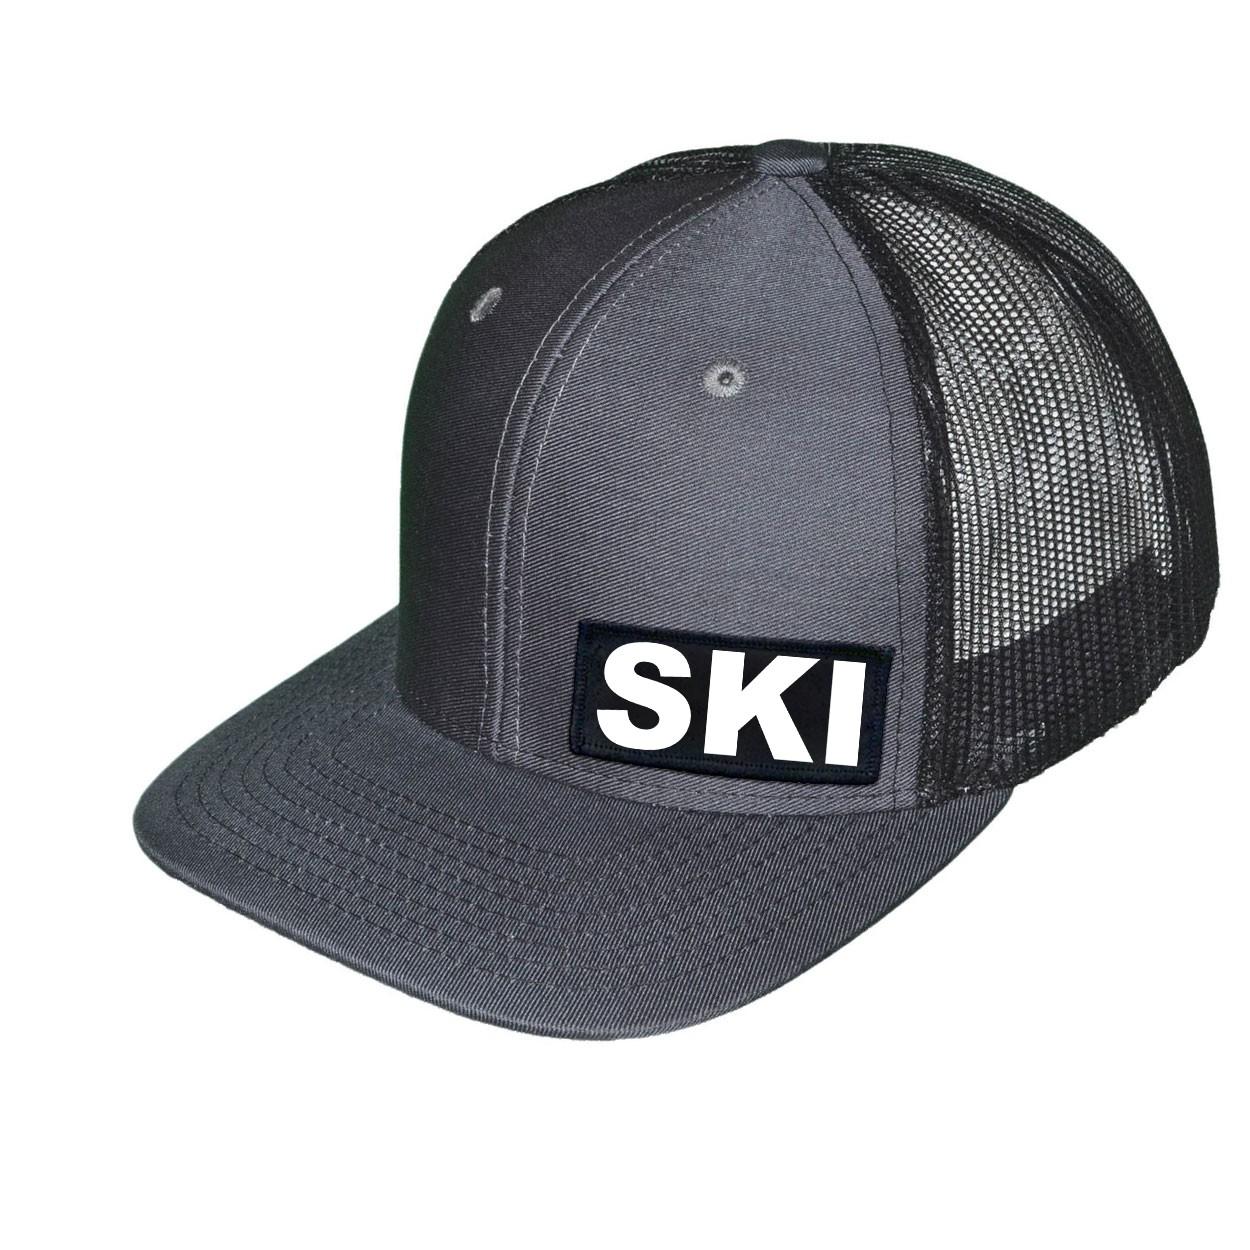 Ski Brand Logo Night Out Woven Patch Snapback Trucker Hat Dark Gray/Black (White Logo)